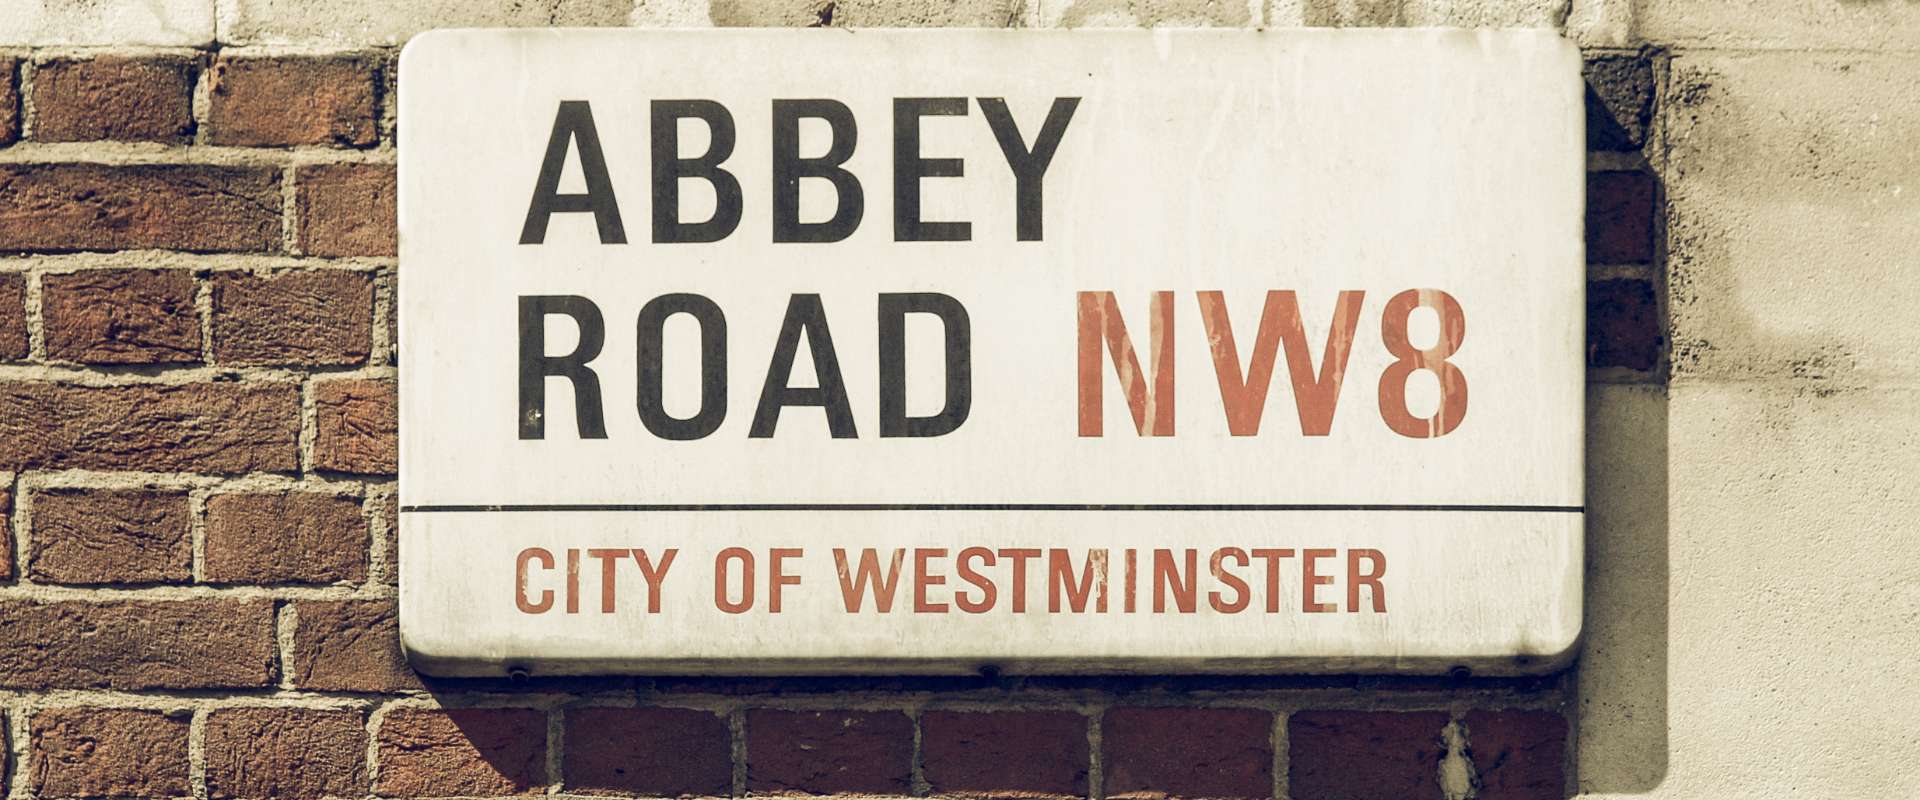 Bulgari Hotel London Experiences Abbey Road